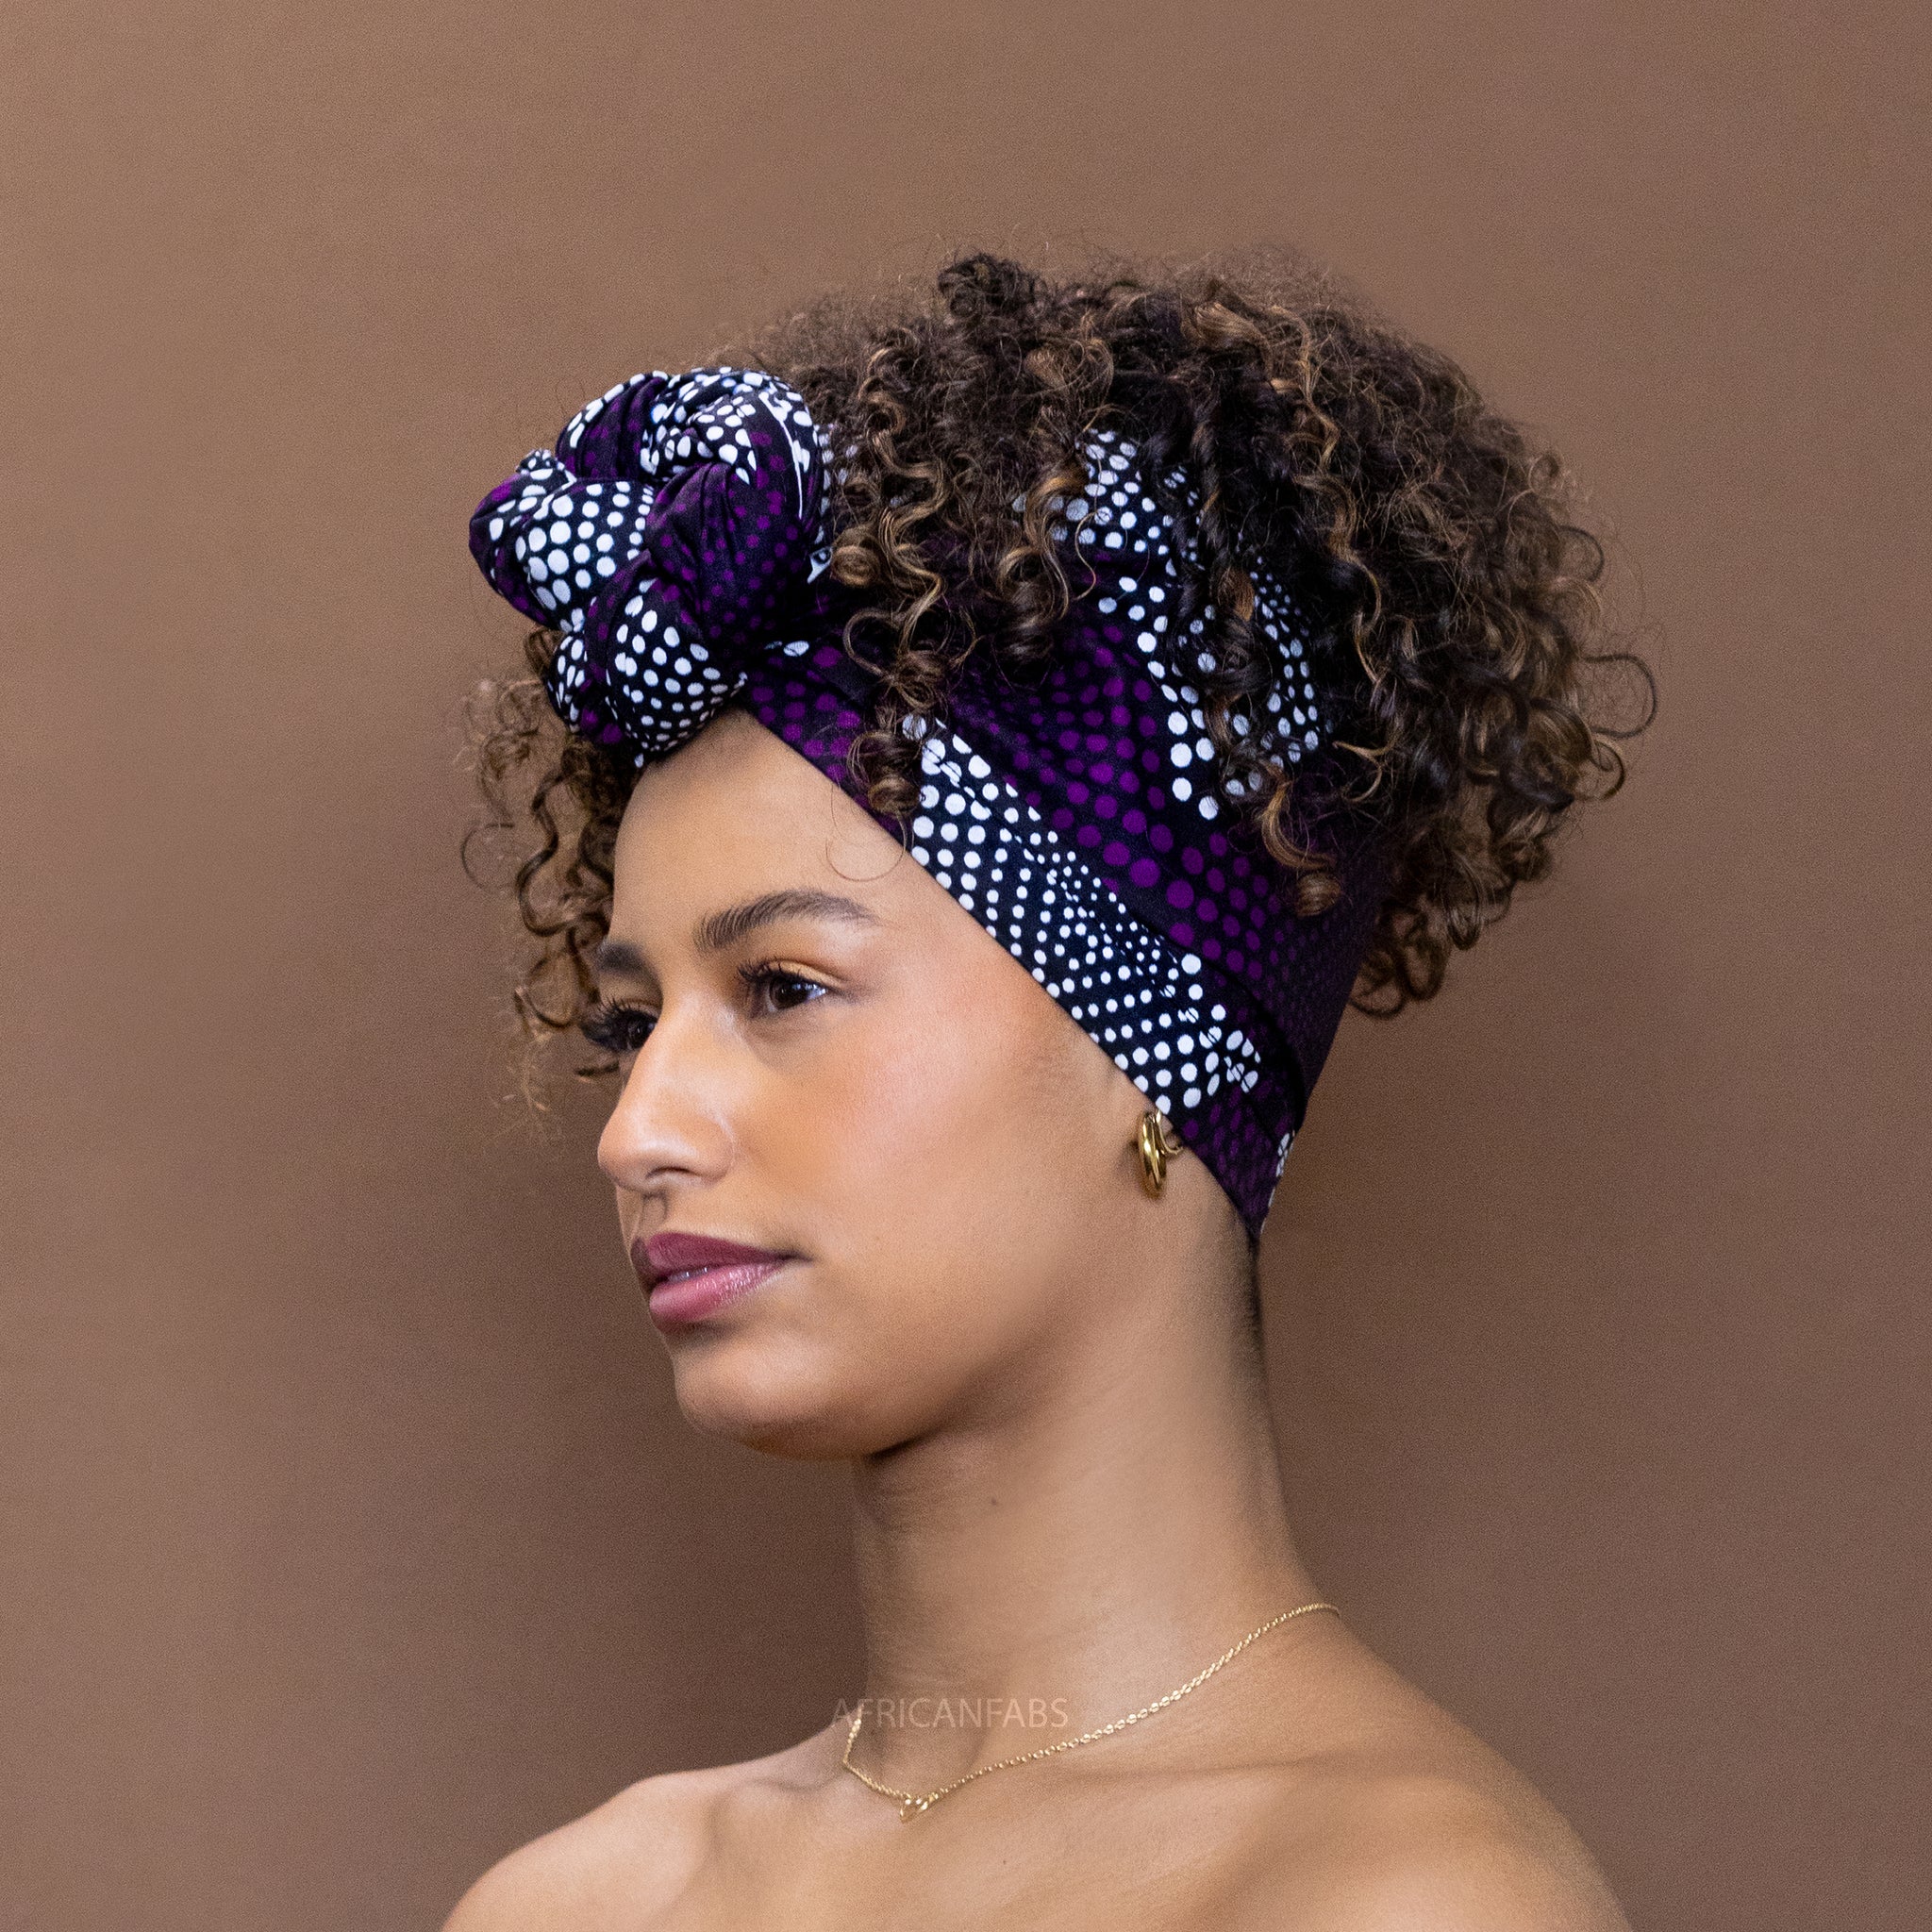 Afrikaanse  Zwart / Witte kente hoofddoek - headwrap